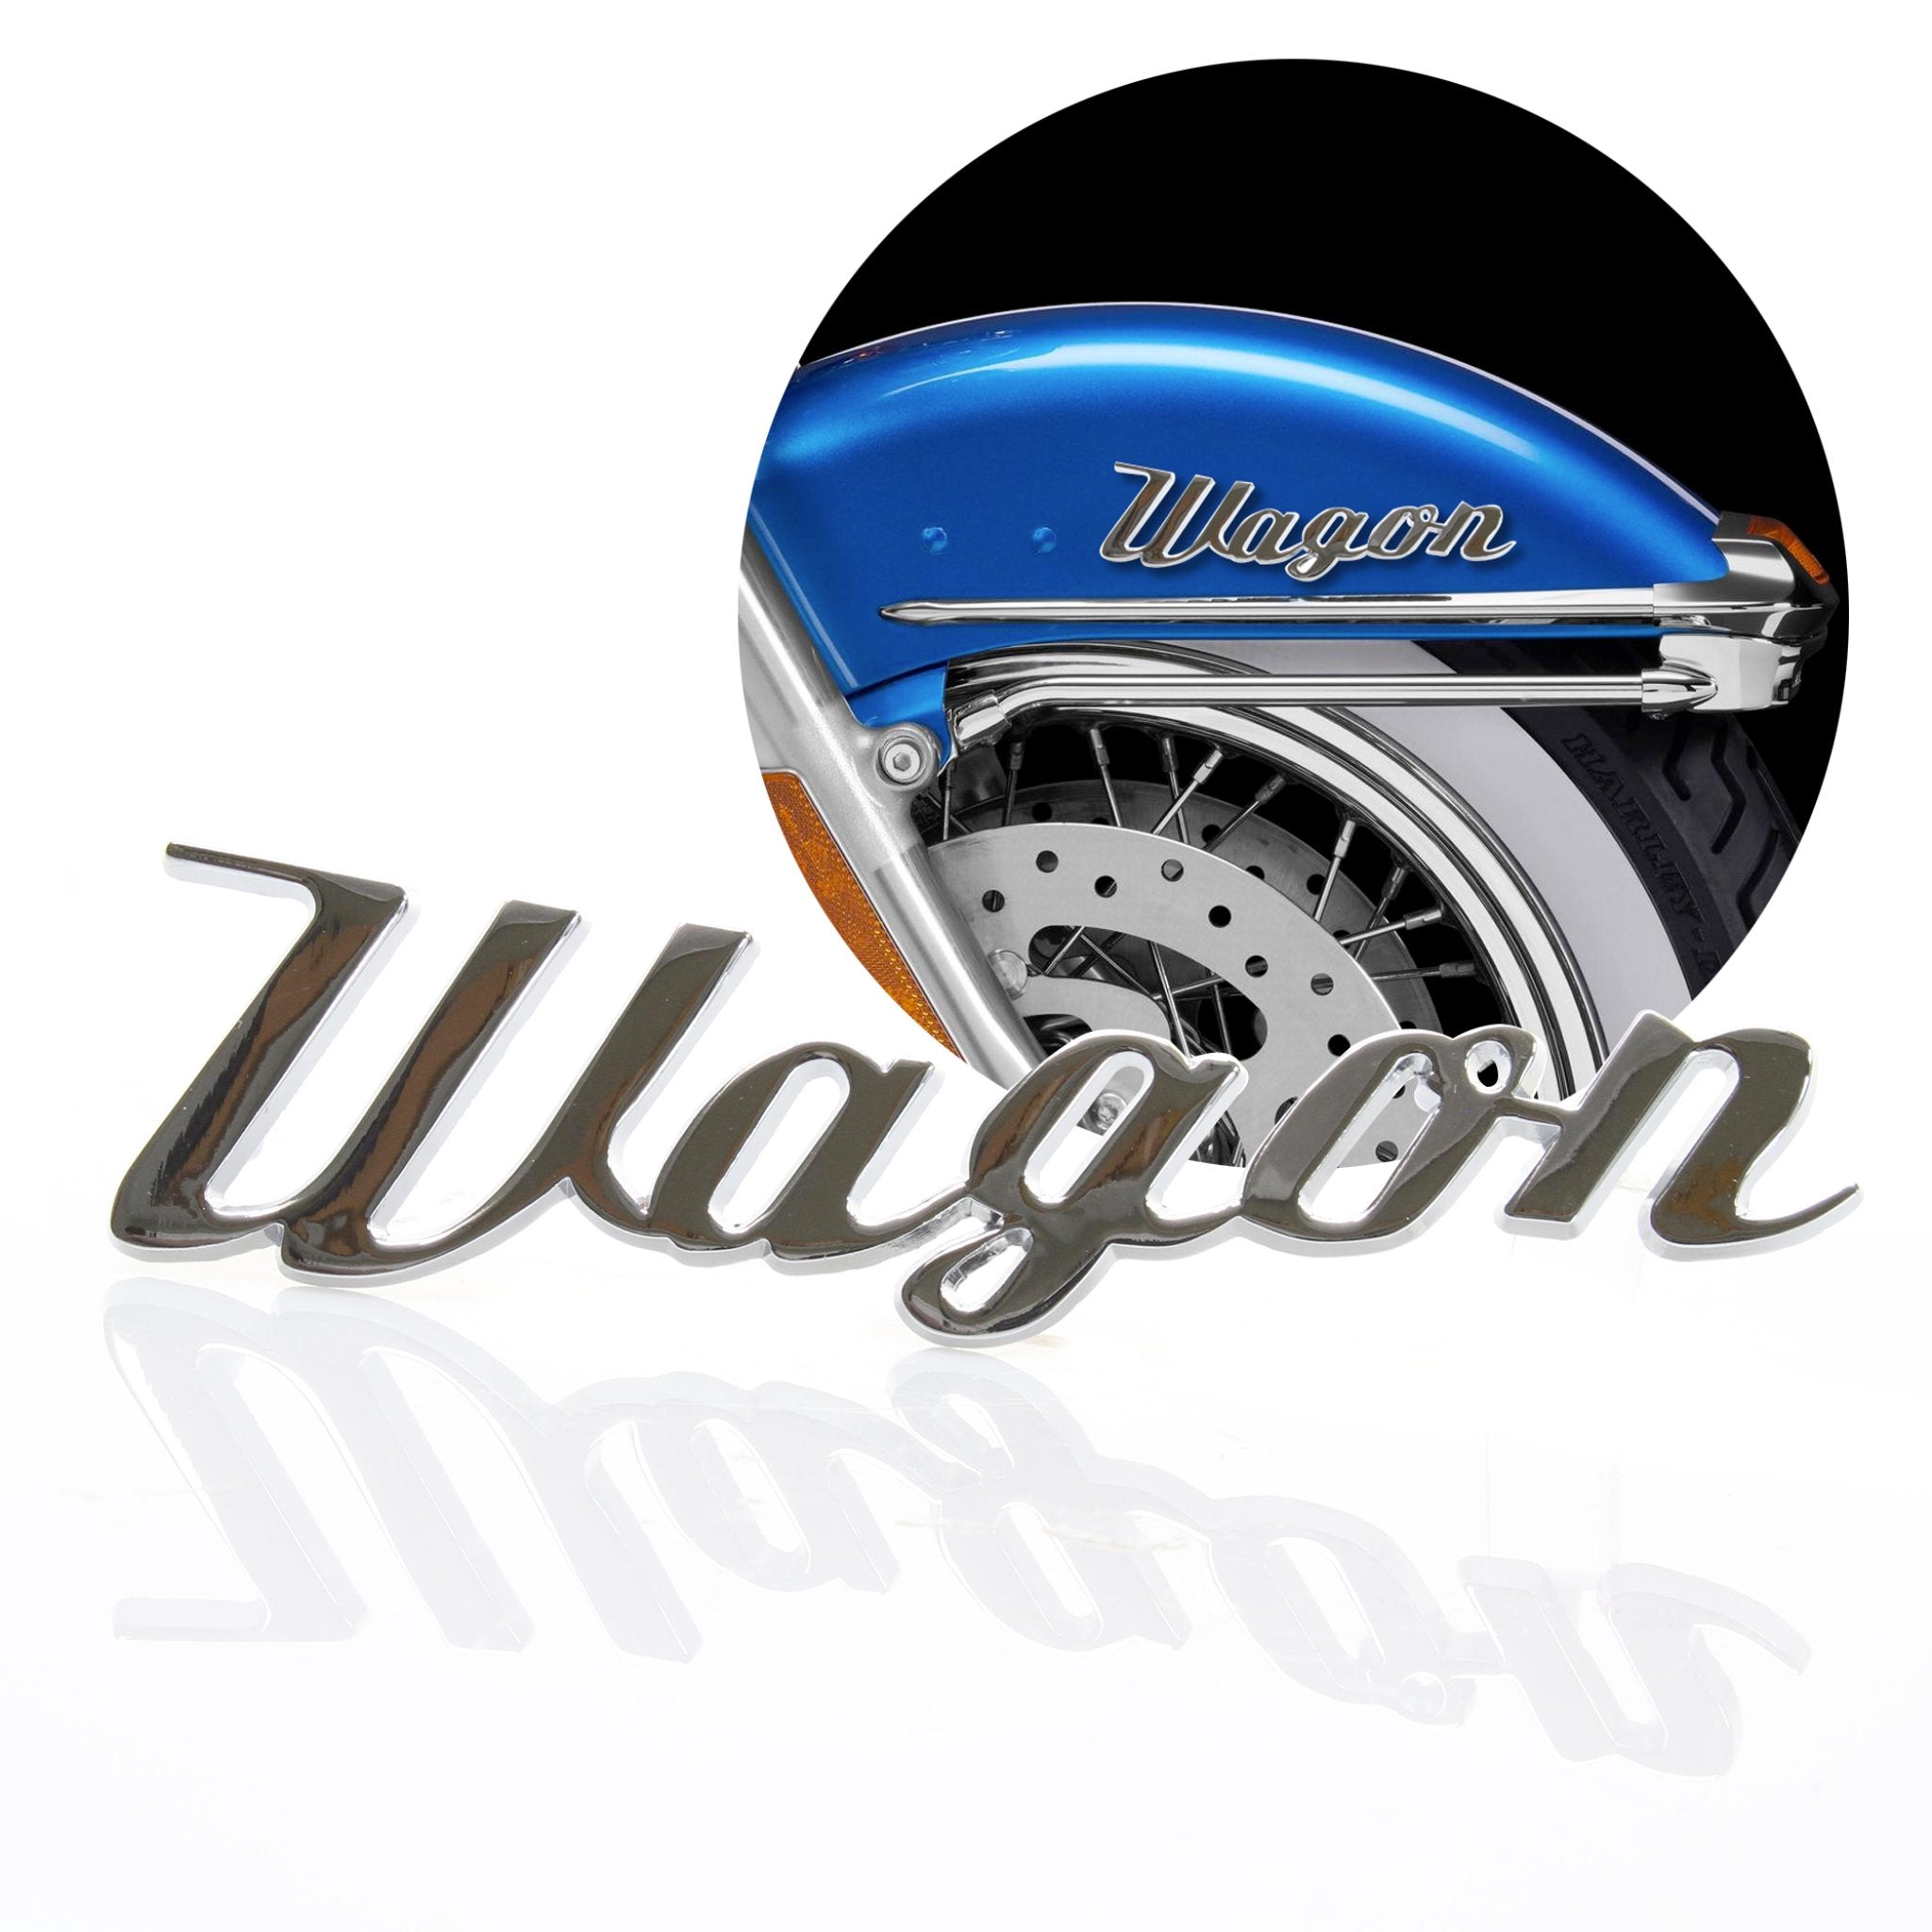 Chrome Metal "Wagon" Auto Script Lettering Fender Emblem Badge Car Truck Hot Rod